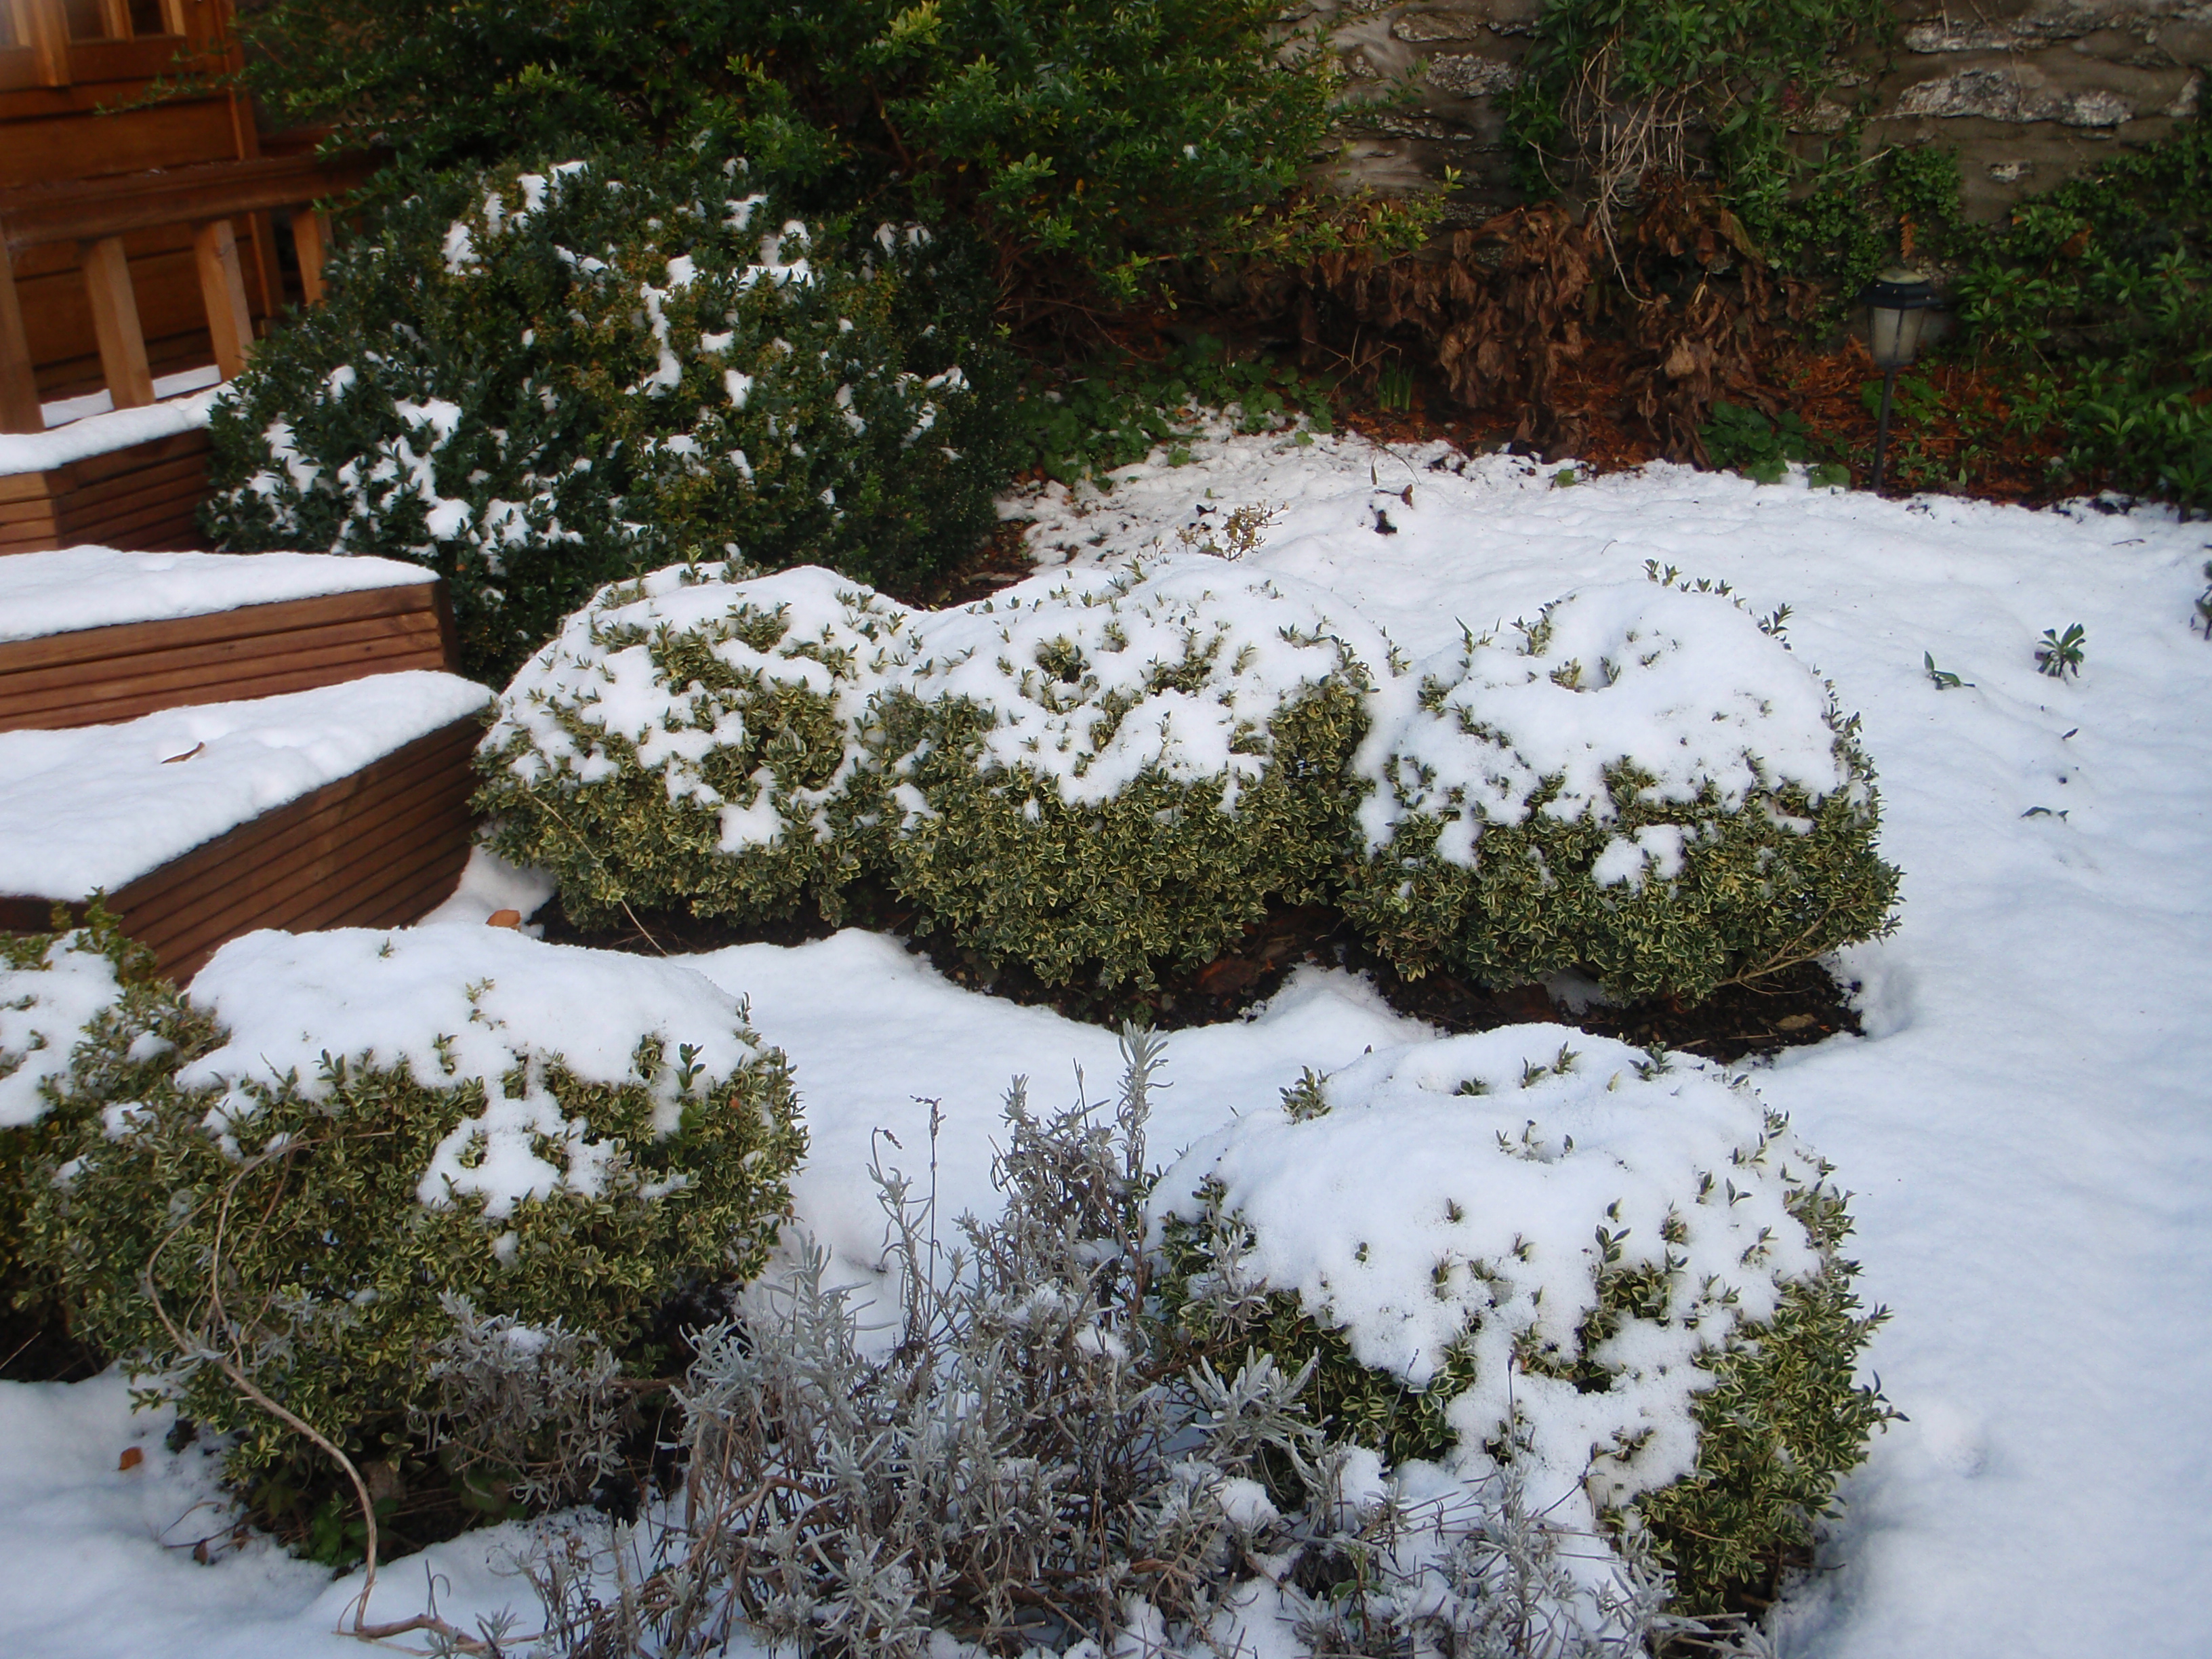 Box bushes under snow | The NSM's View